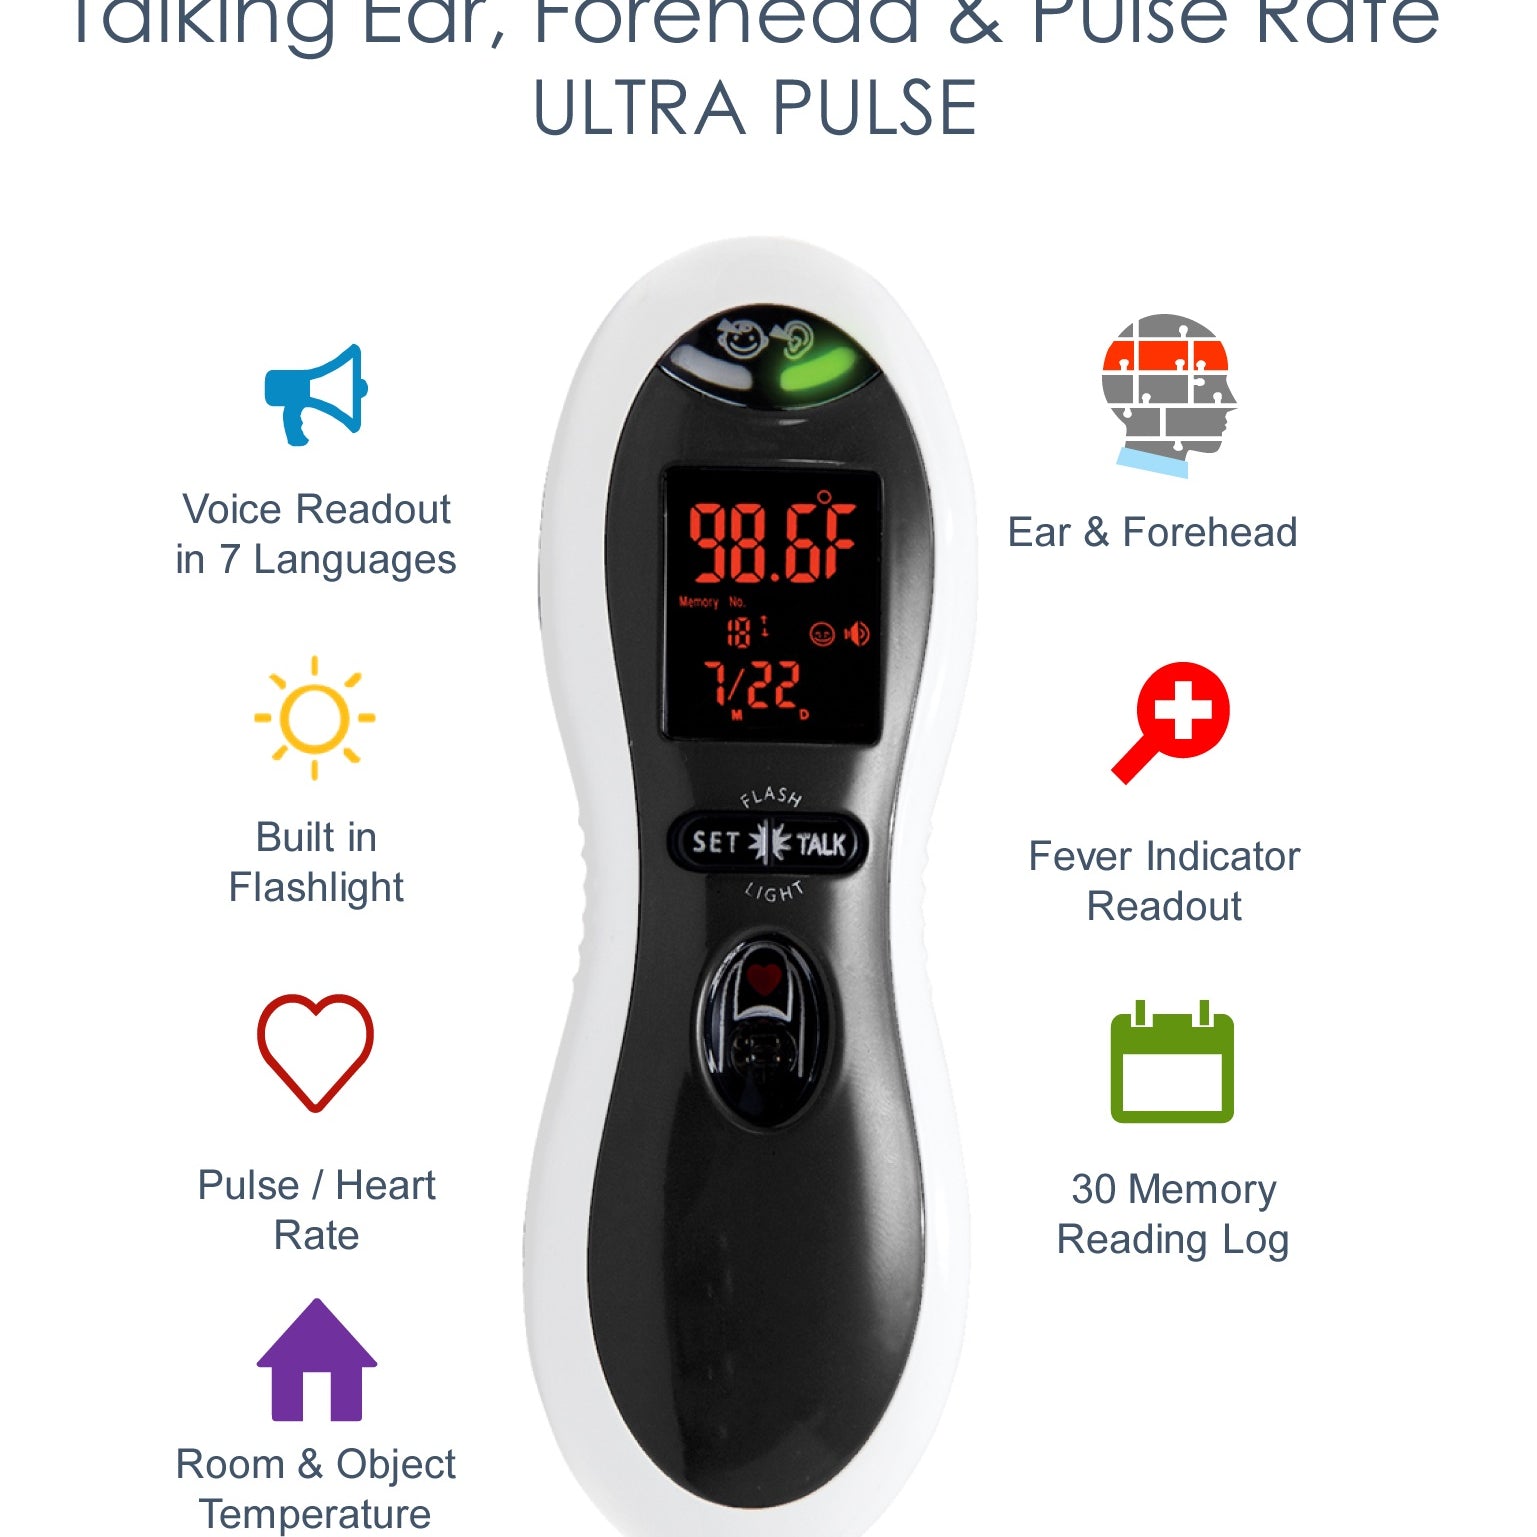 Dual Scan Ultra - Pulse + Ear + Forehead Thermometer uniq